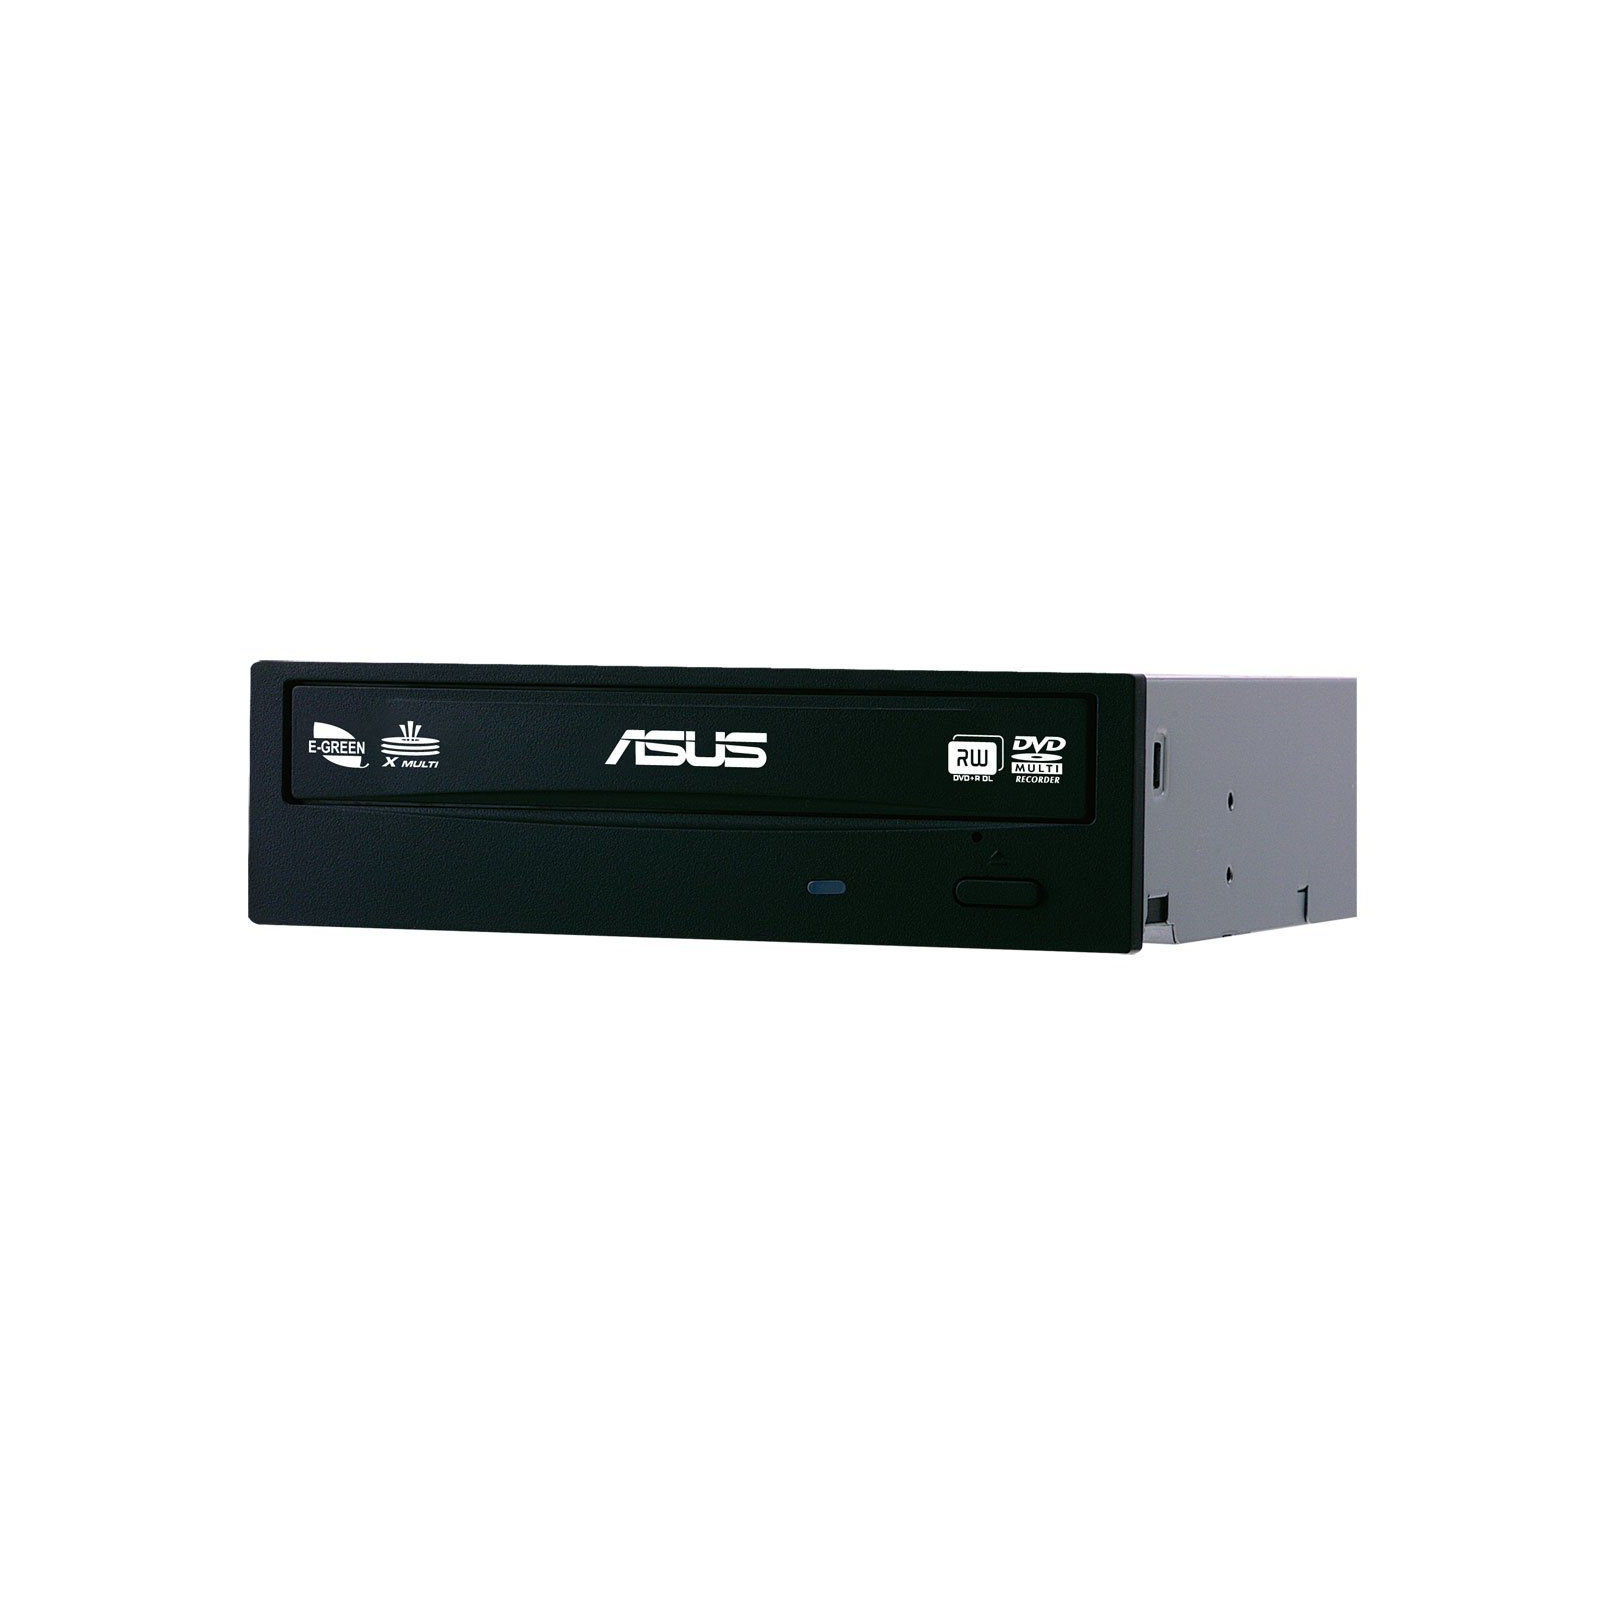 Оптический привод DVD-RW ASUS DRW-24F1MT/BLK/B/AS